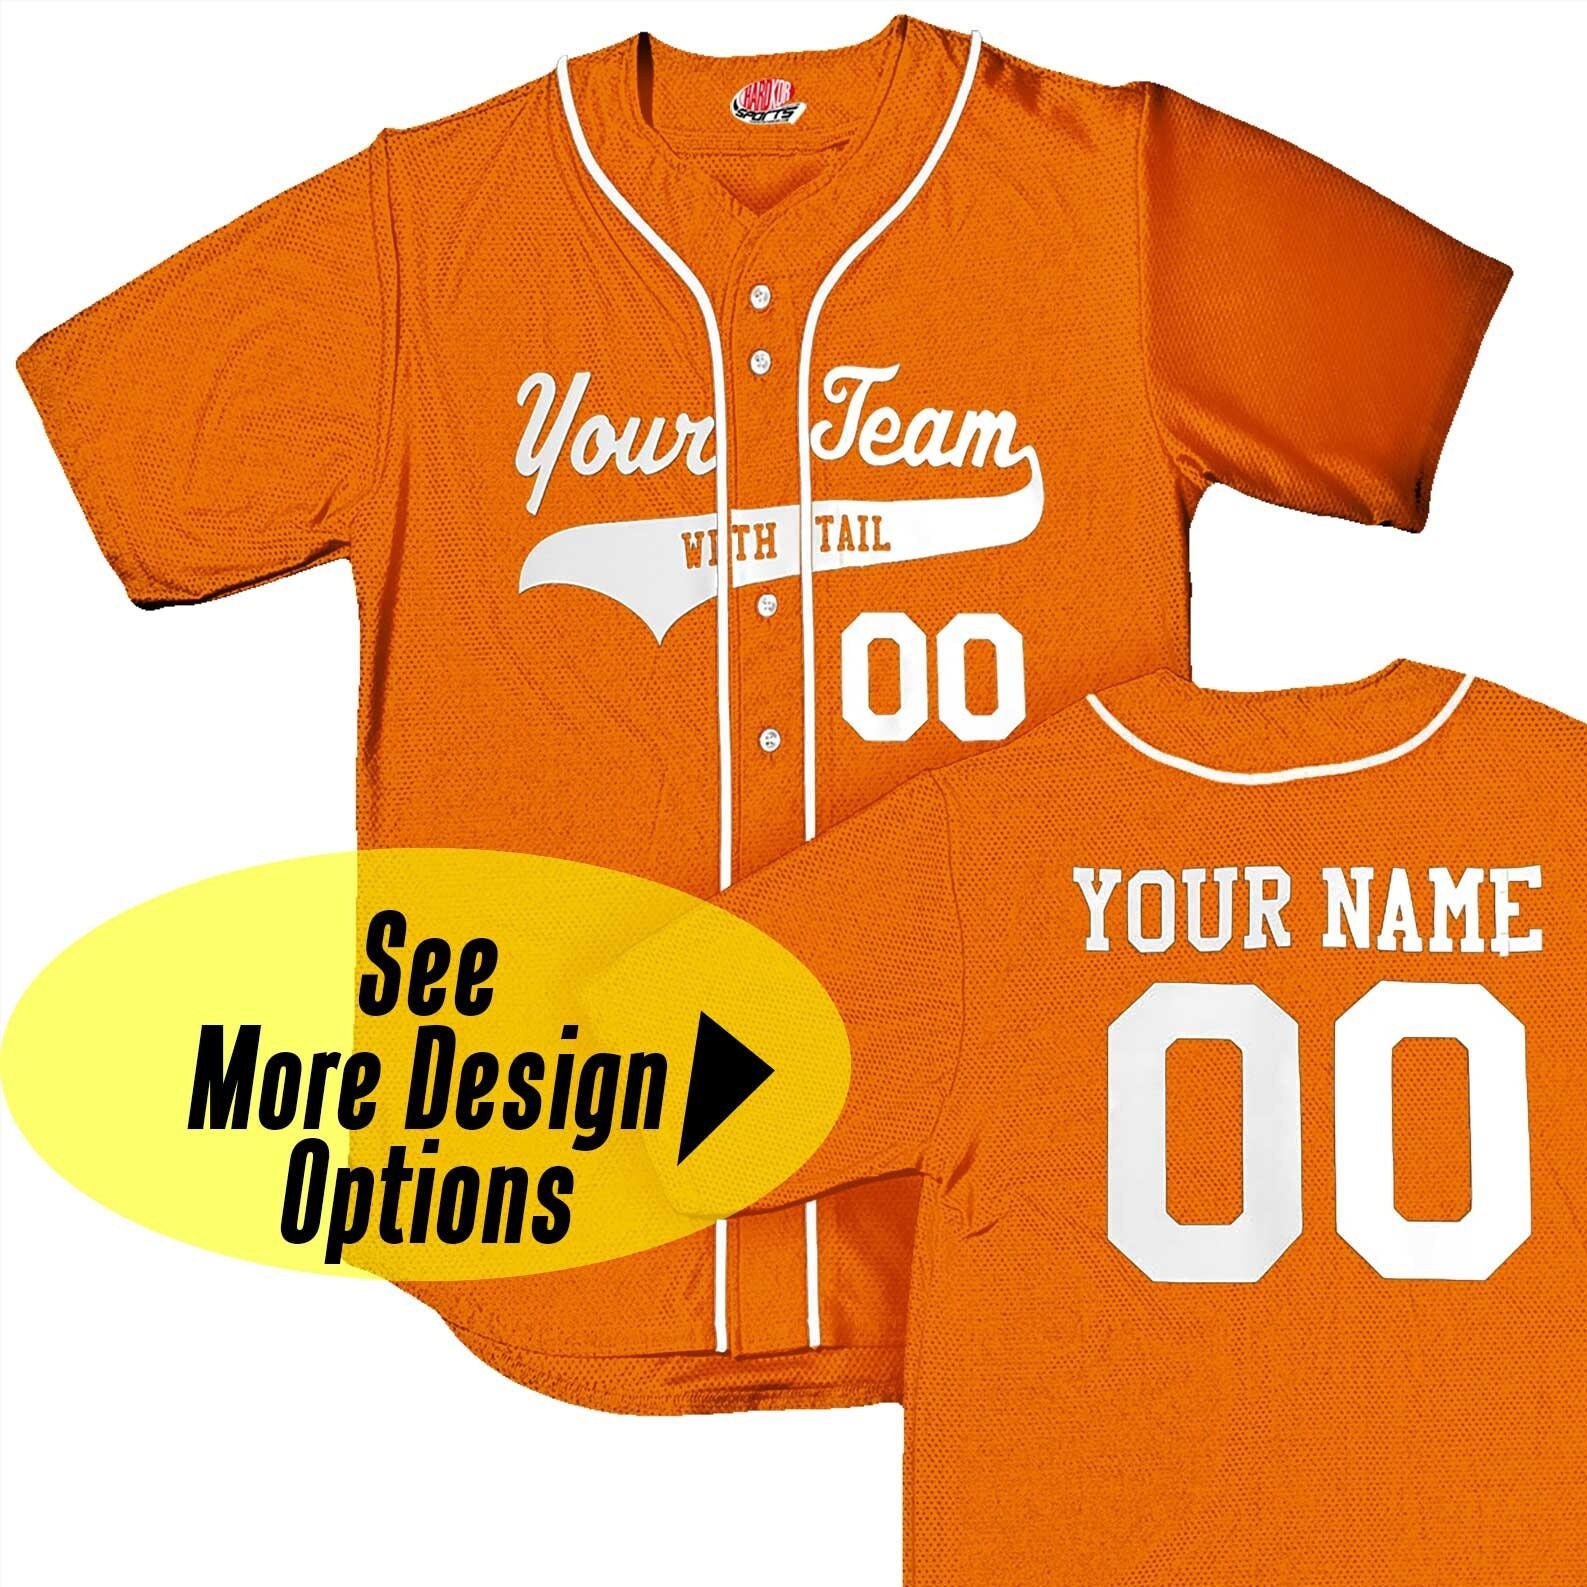 Custom Orange Baseball Jersey With White Piping. Personalized